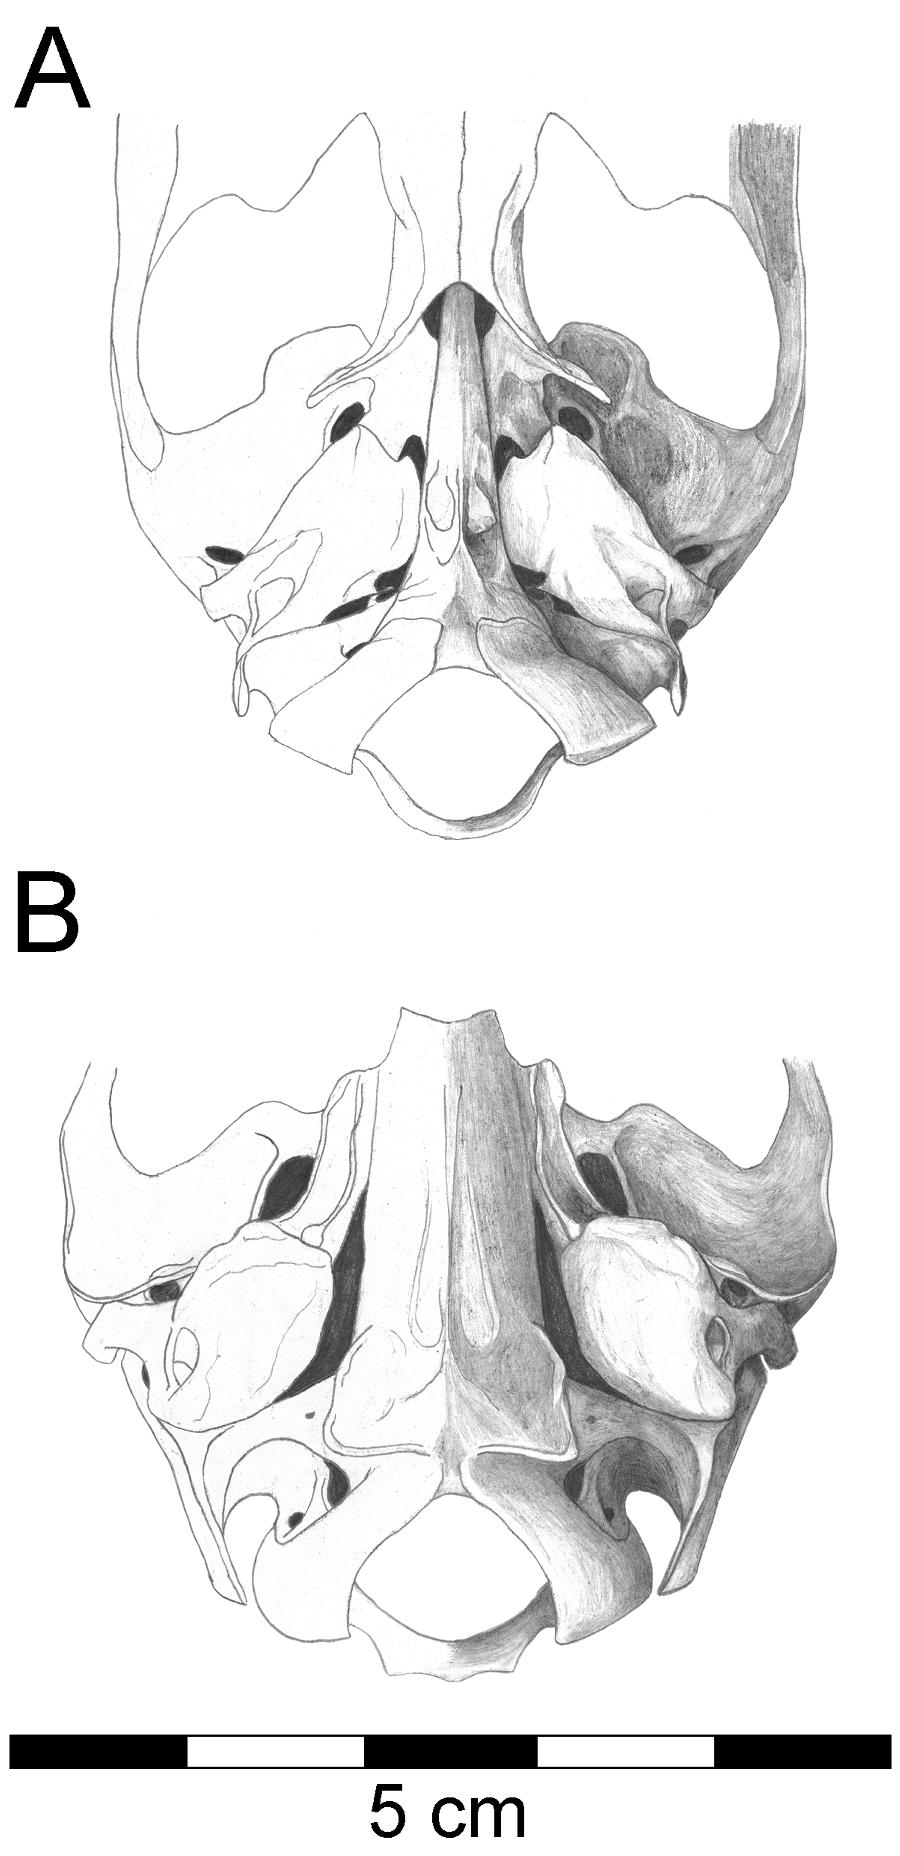 Webb, S.D.: Revision of the Extinct Pseudoceratinae 51 Figure 15. Basicranial sketches of A, Tragulus javanicus and B, Floridameryx floridanus (UF 19257).